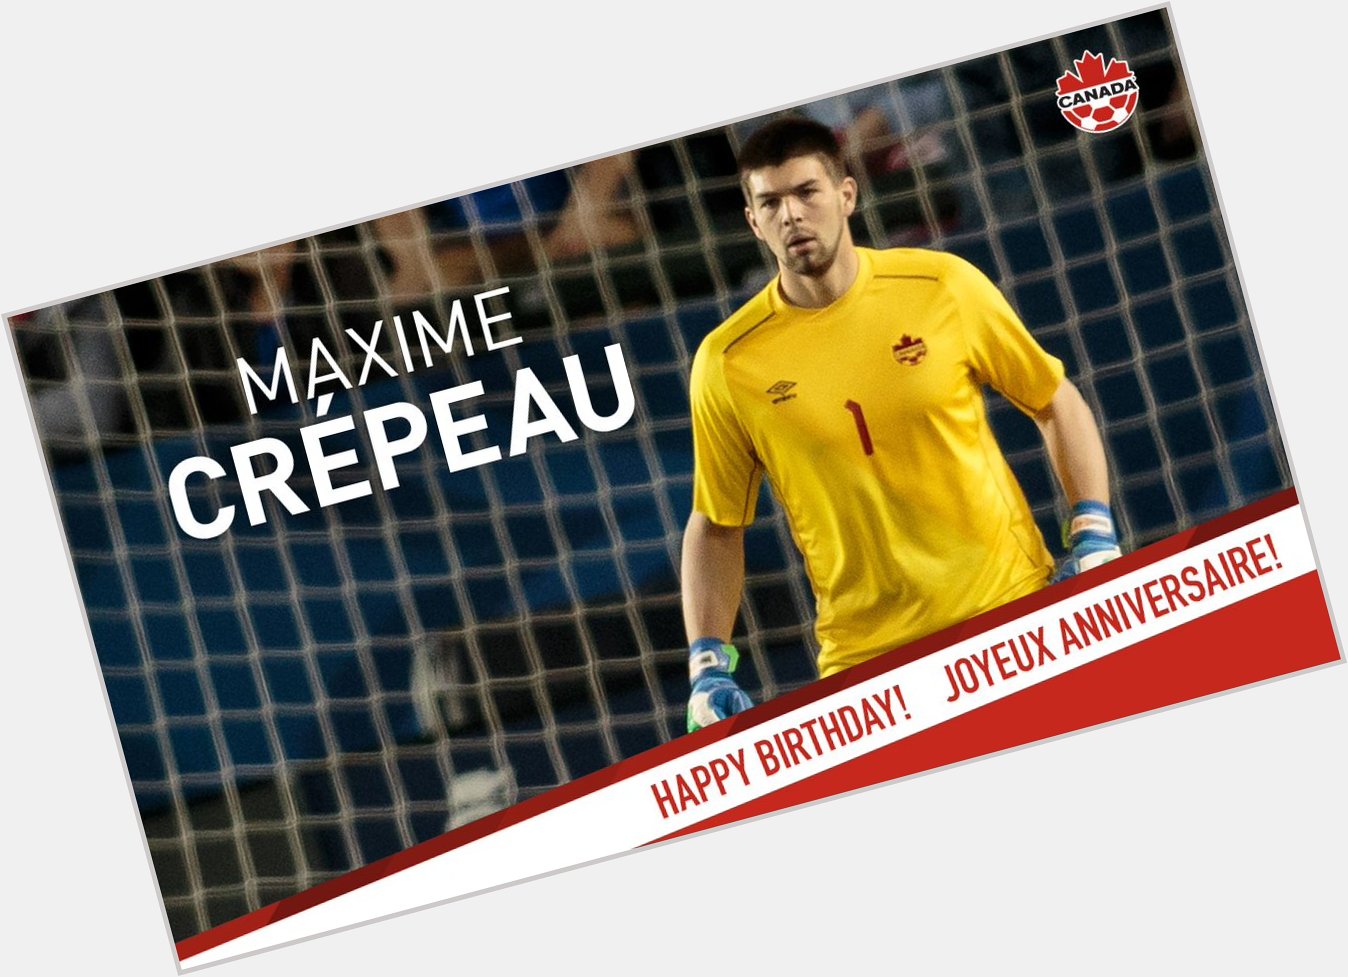 Happy birthday to Goalkeeper Maxime Crépeau! 